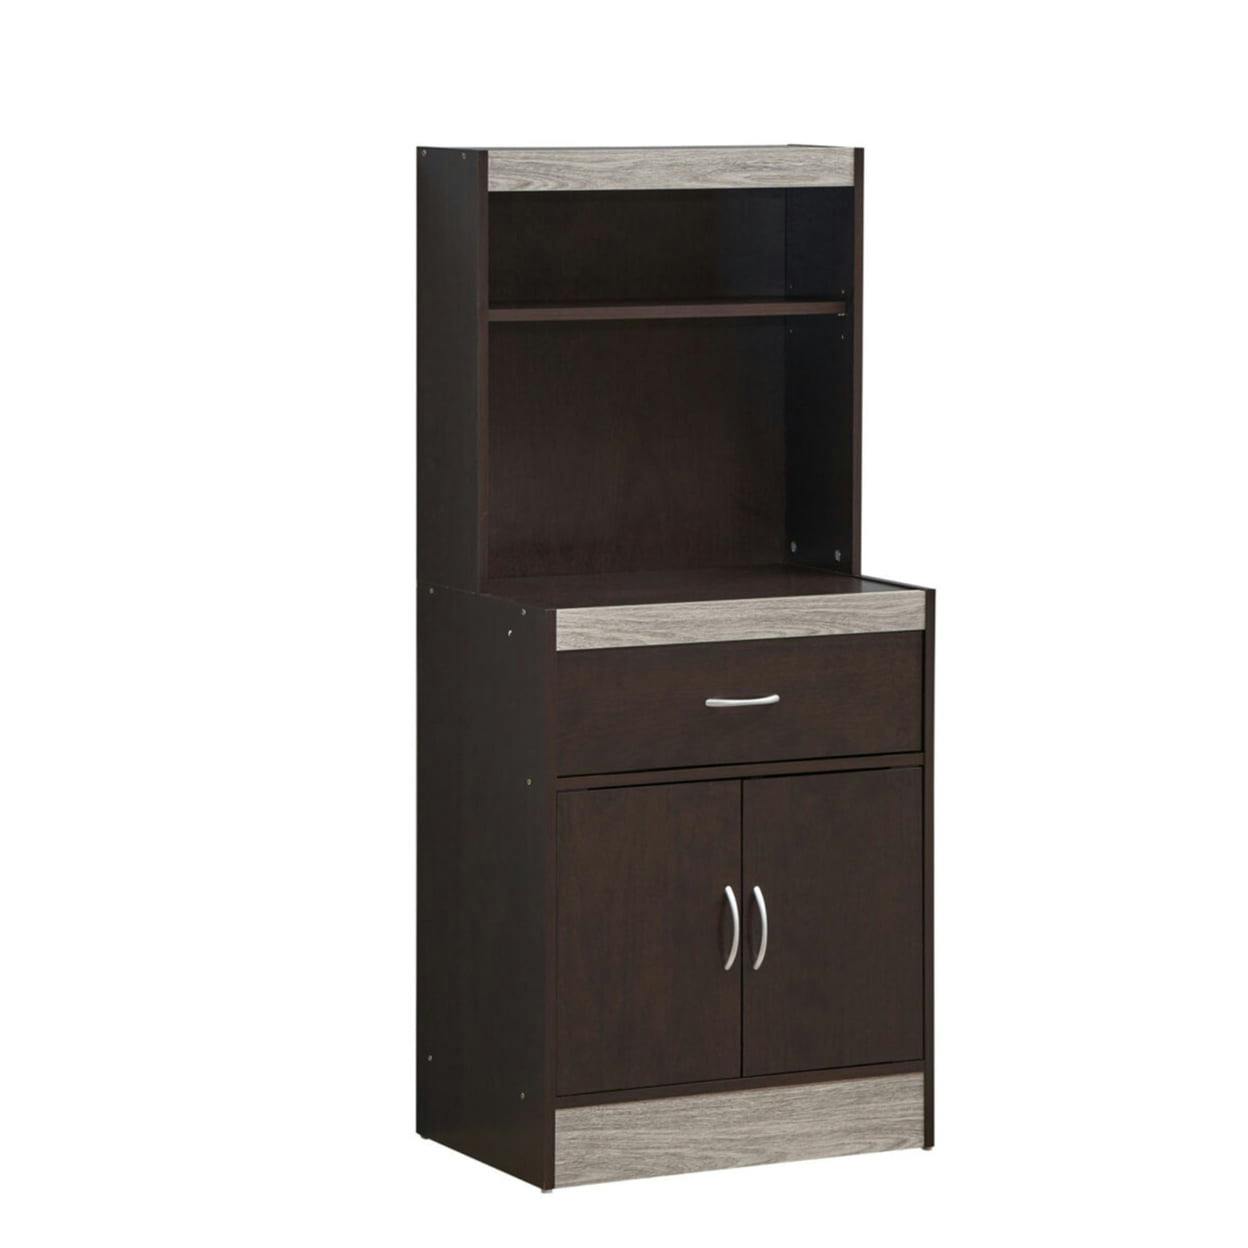 Hodedah 54" Chocolate-Grey Open Shelf and Enclosed Storage Kitchen Cabinet